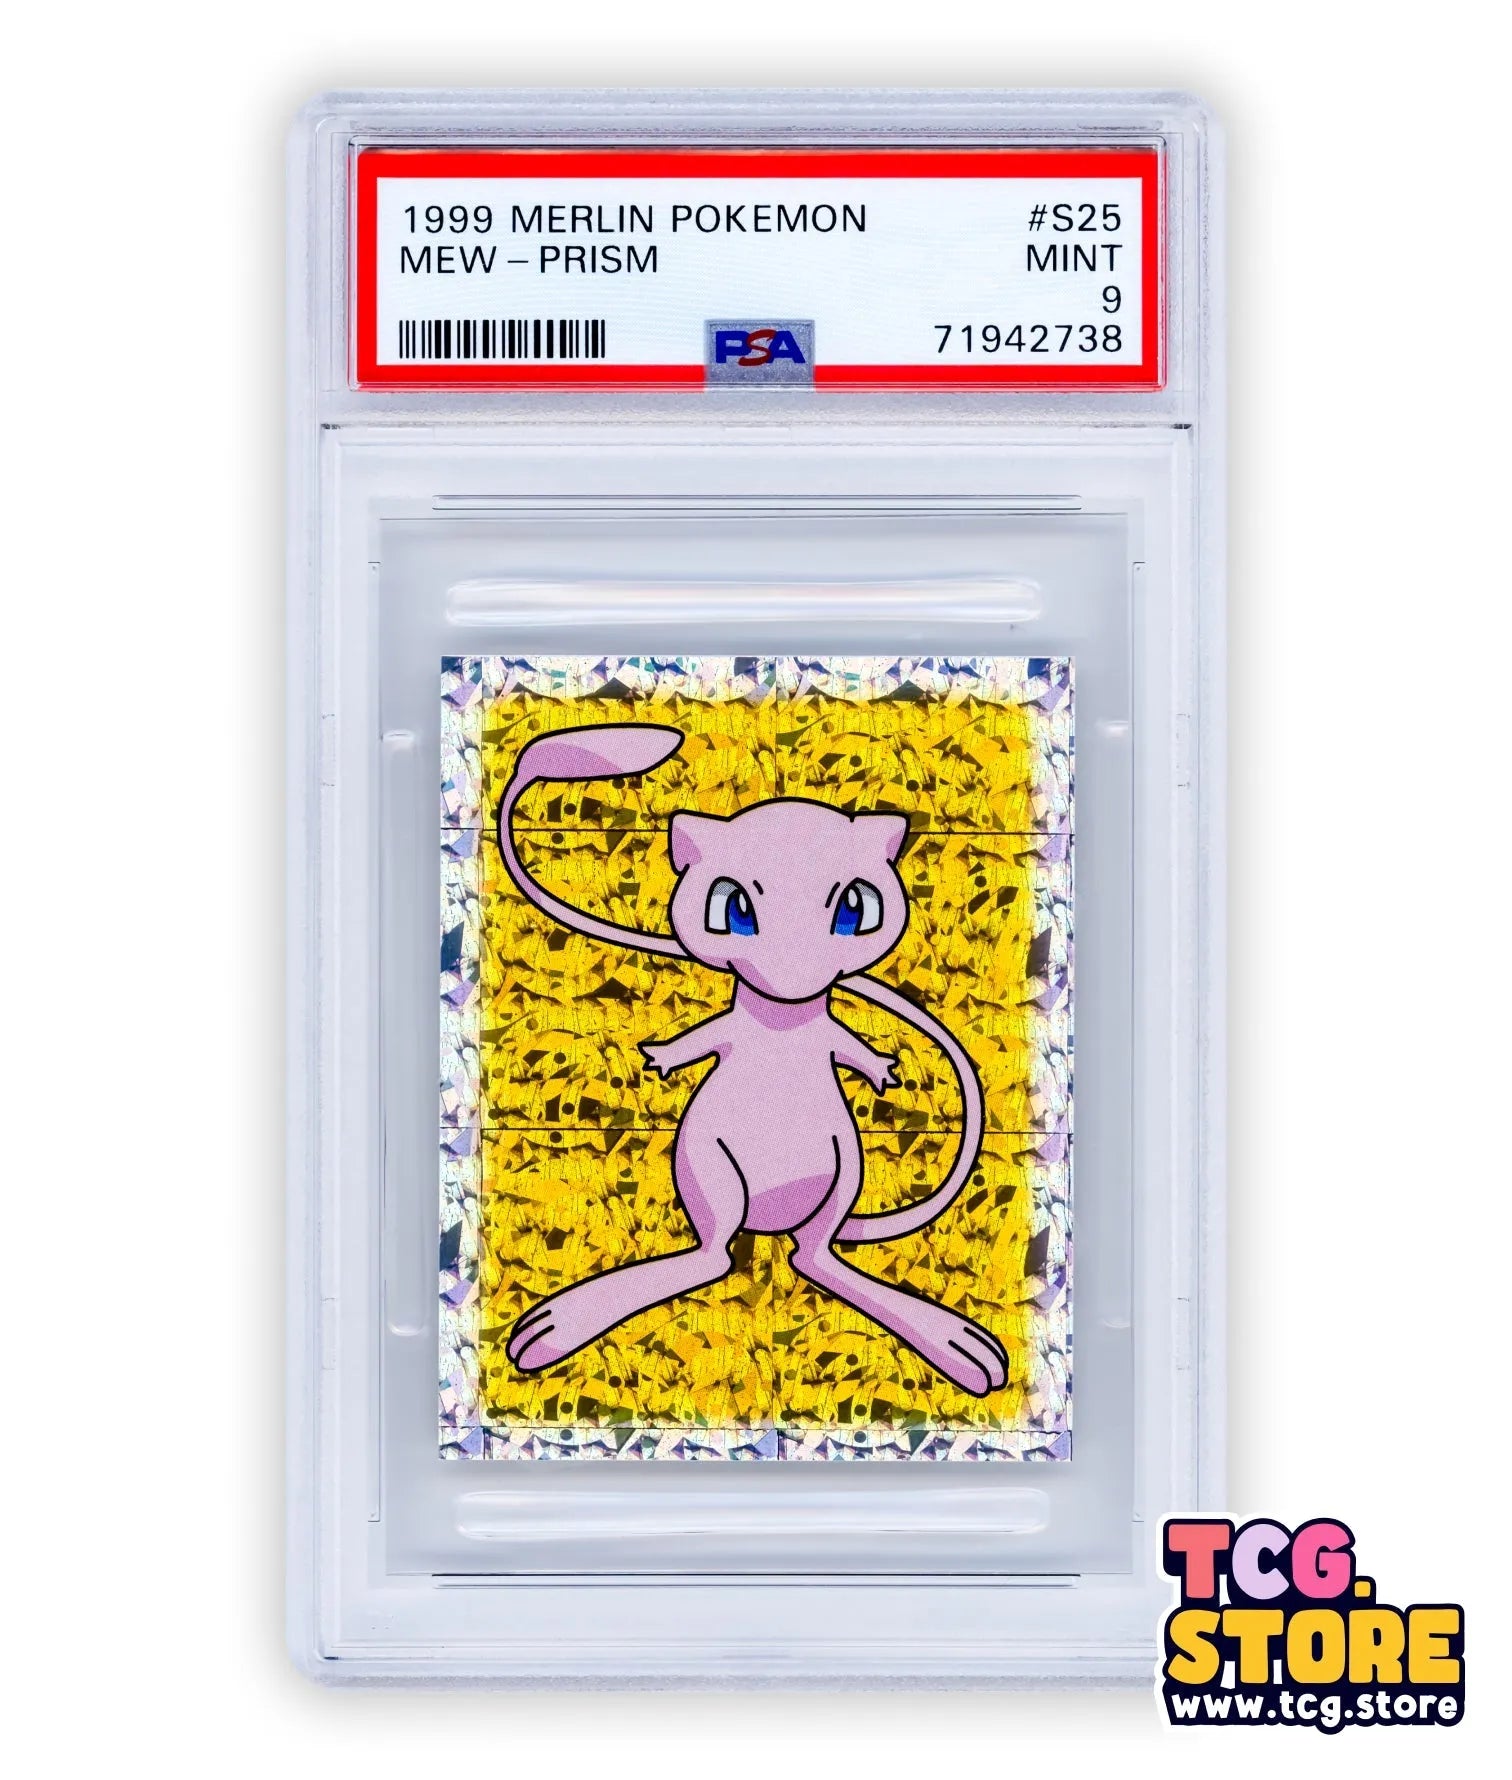 1999 #S25 Merlin Pokemon Mew Gold Glitter Cracked Ice Holo Merlin Sticker - PSA 9 - TCG.Store